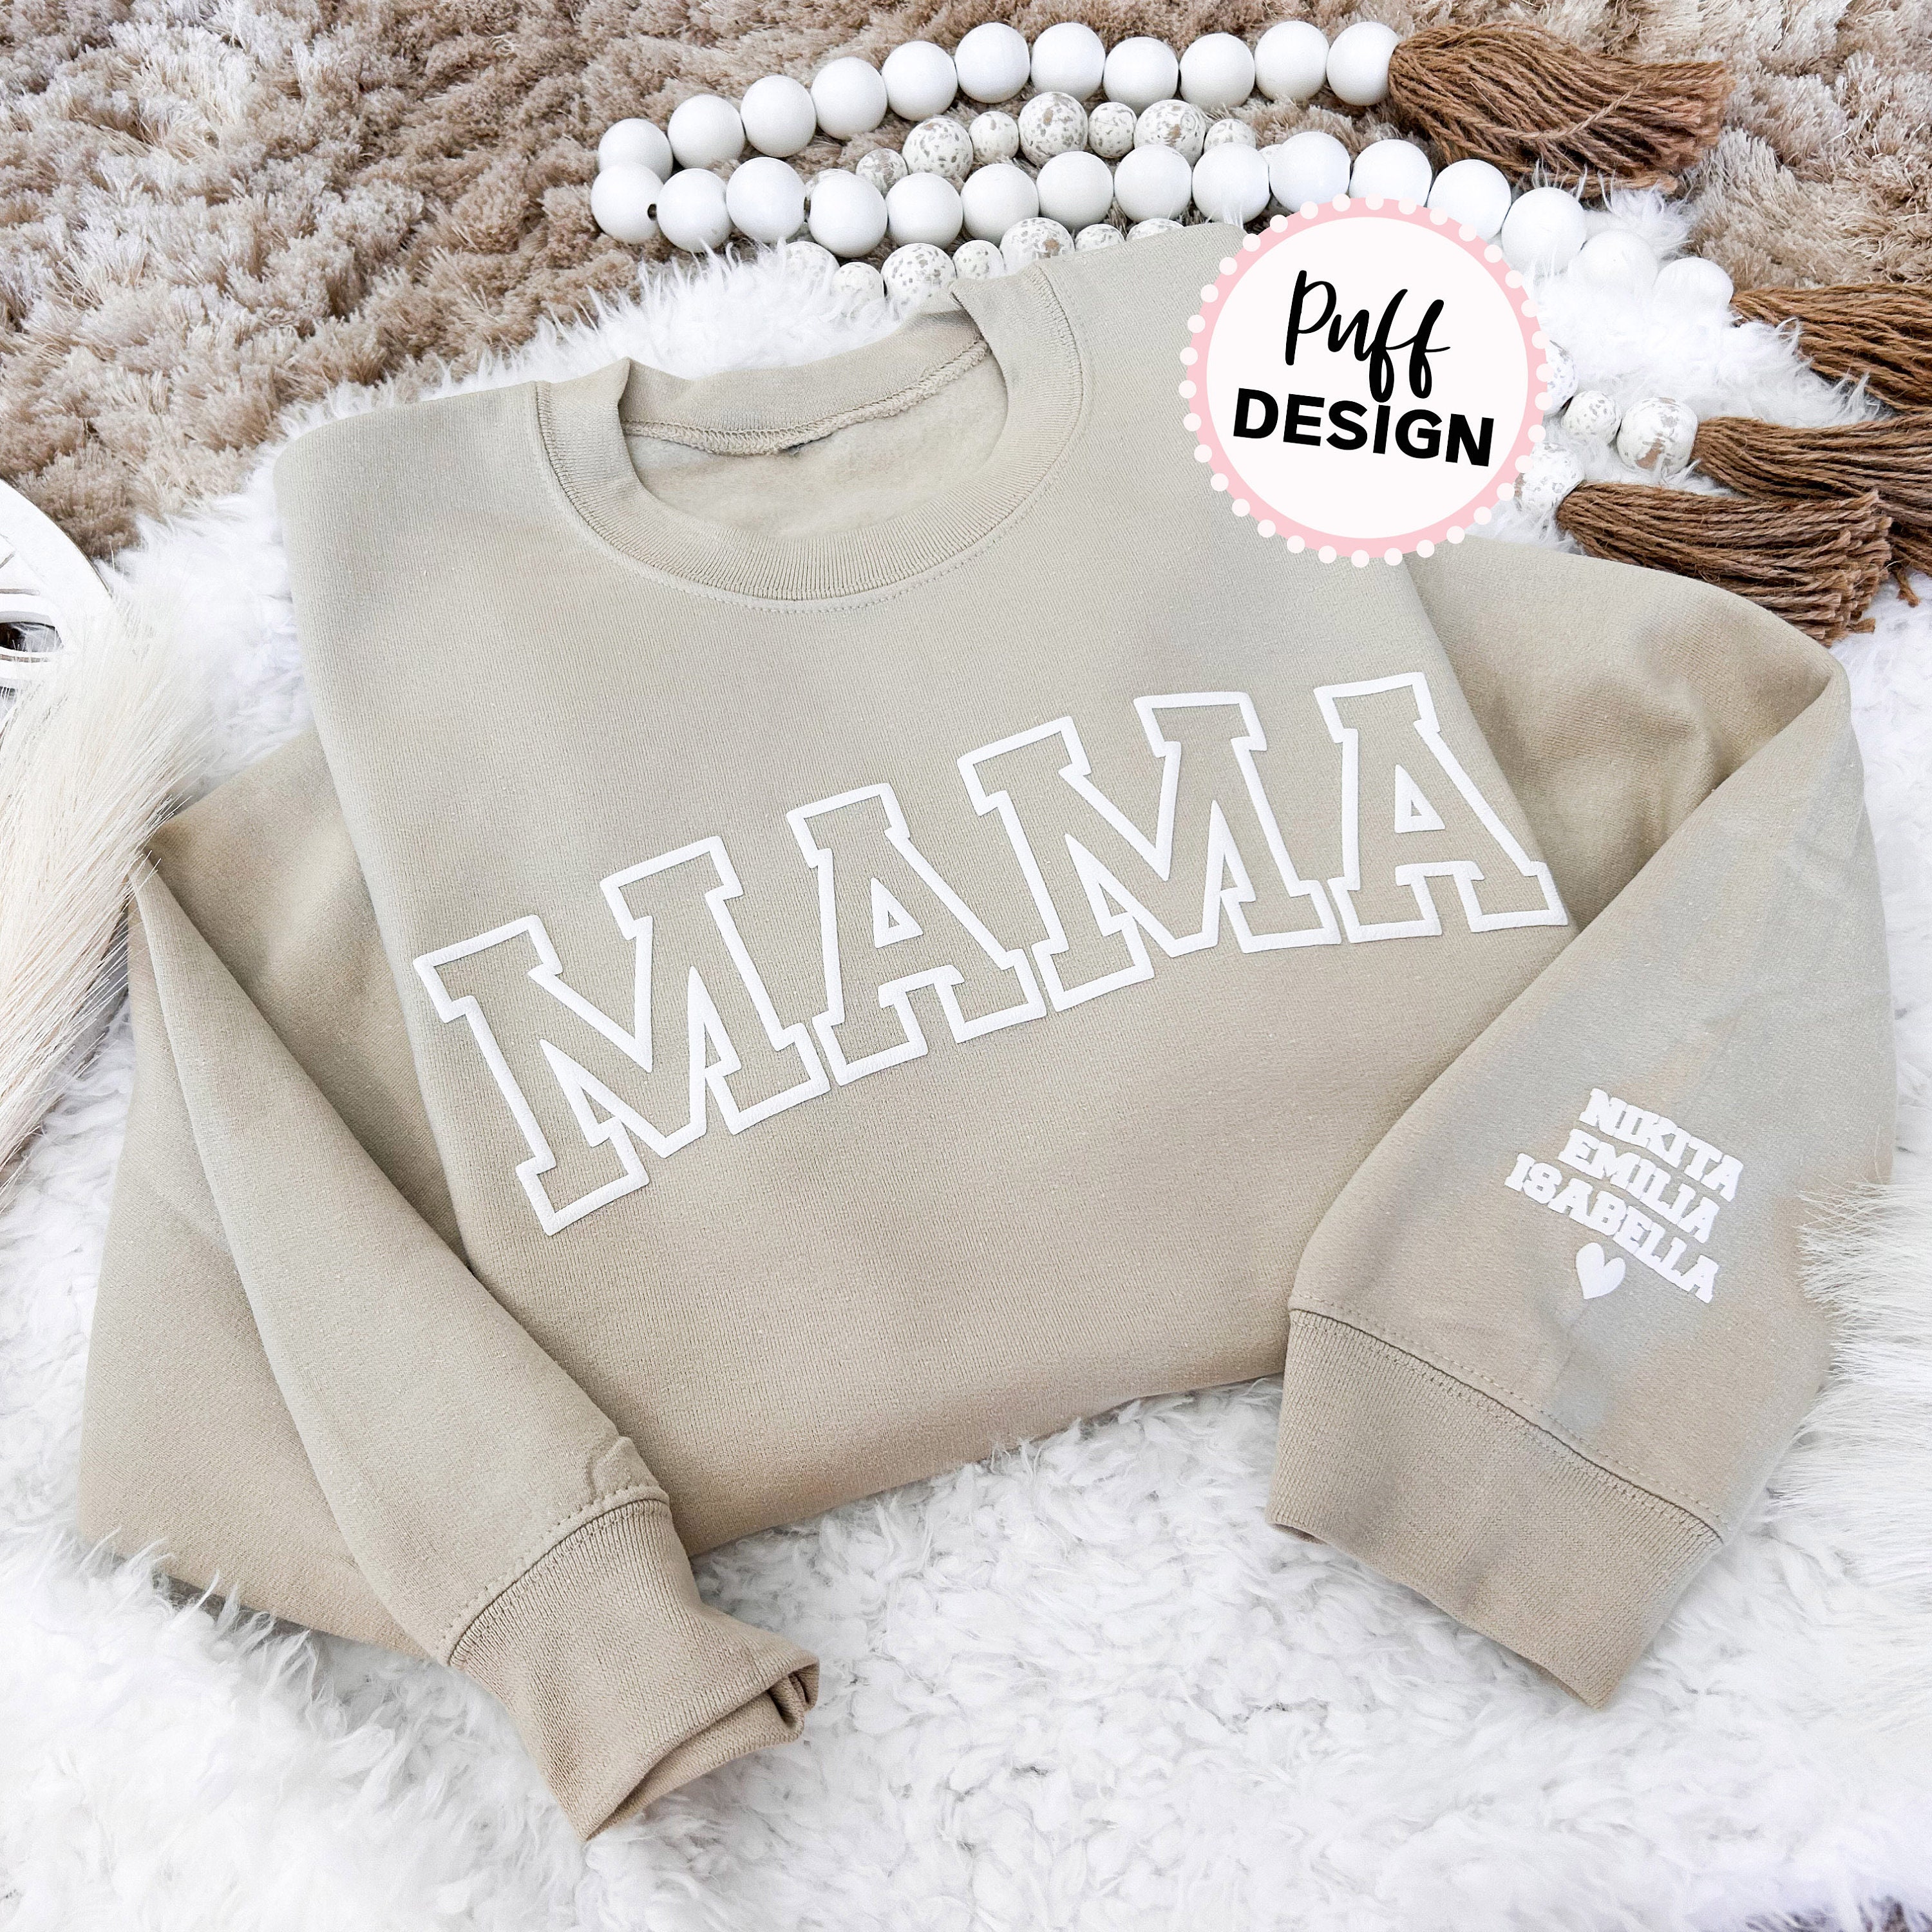 Neon Pink Puff Vinyl Mama/Mini Sweatshirt – Cutie Pie Designs